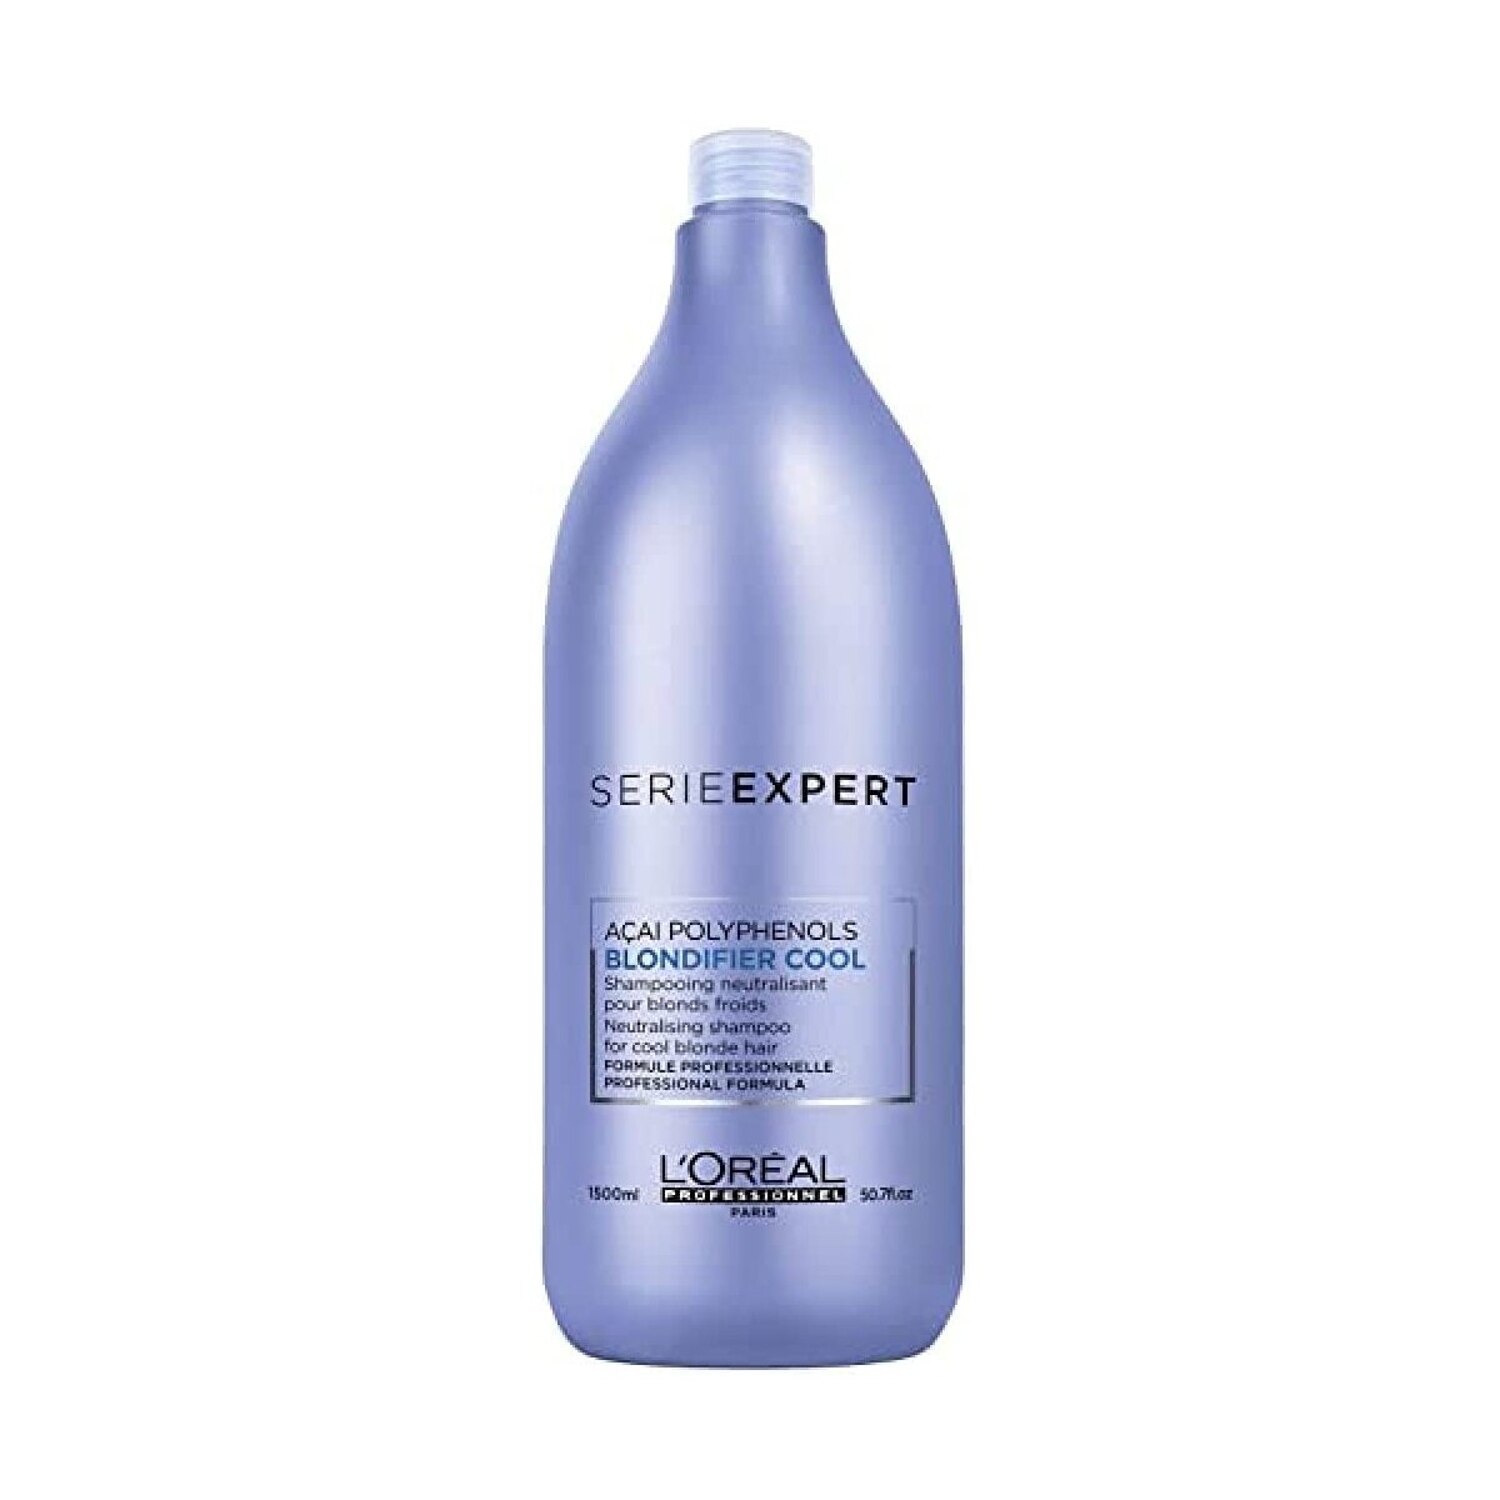 Shampoo L'Oreal Professionnel Paris Serie expert Blondifier Cool 1500ml